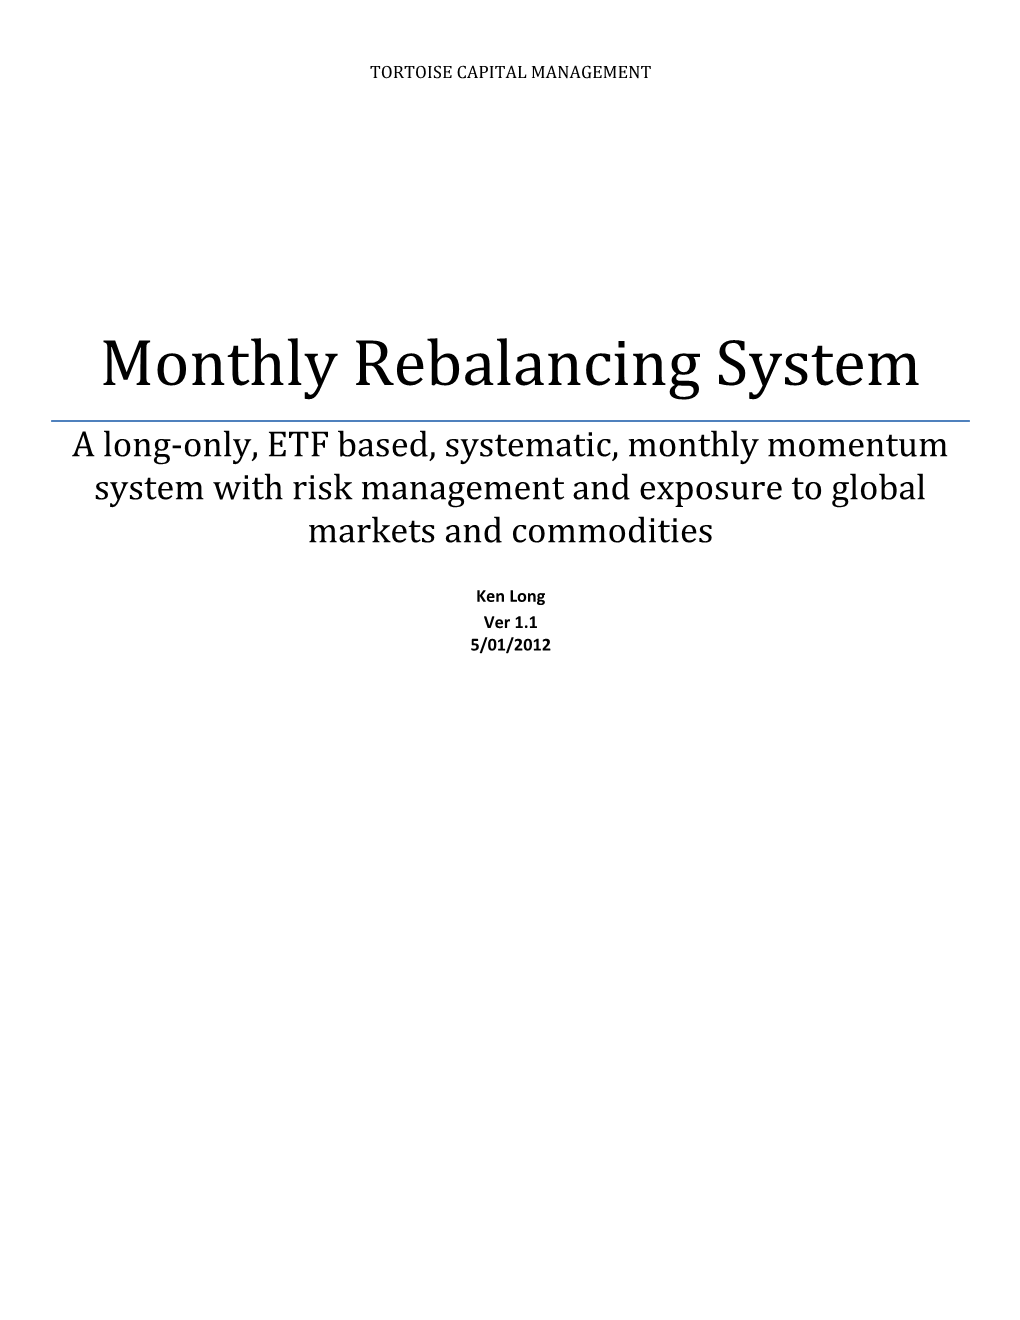 Monthly Rebalancing System